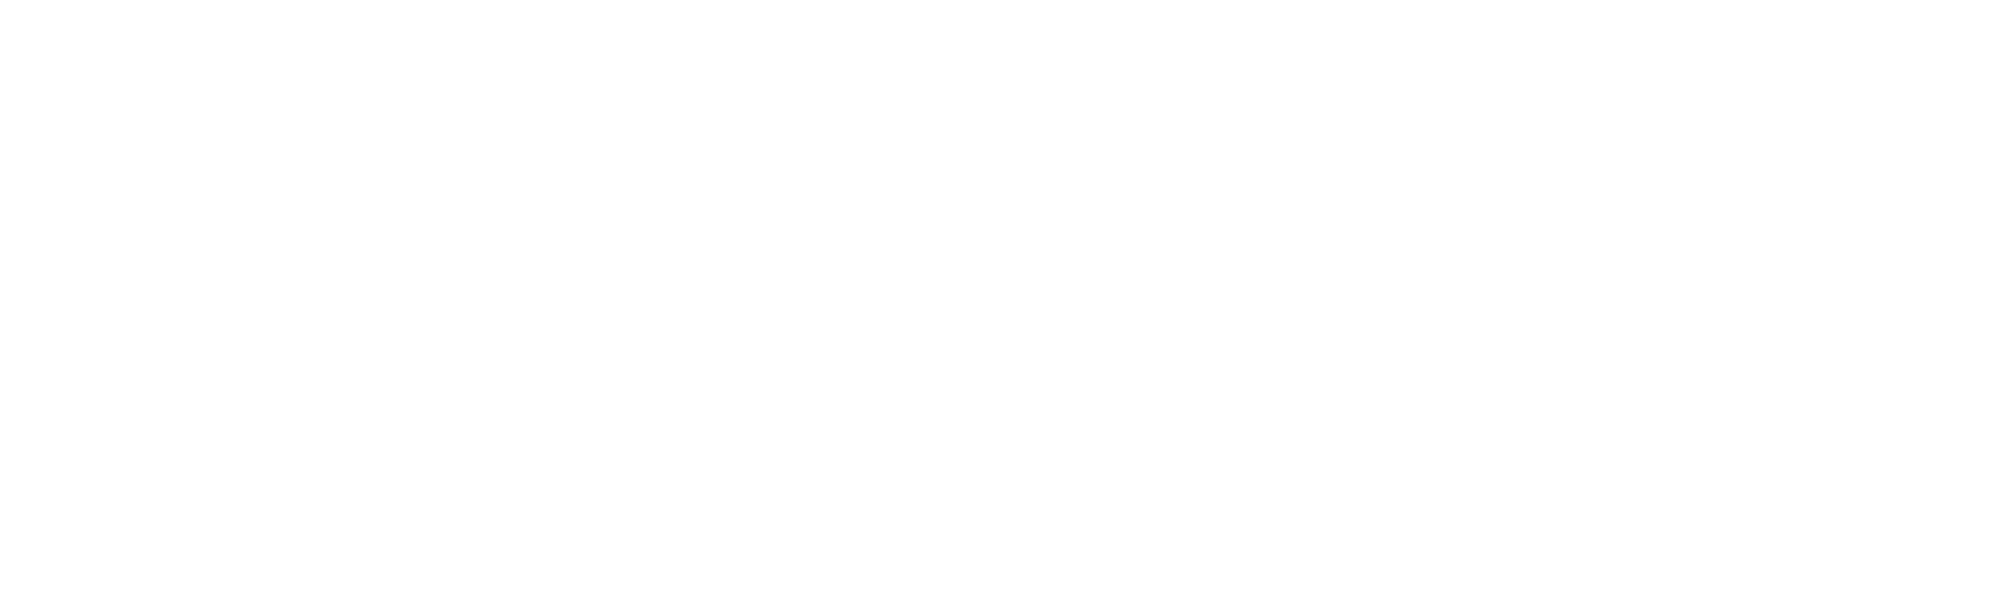 Nova Gorica y Gorizia, Capital Europea transfronteriza 2025